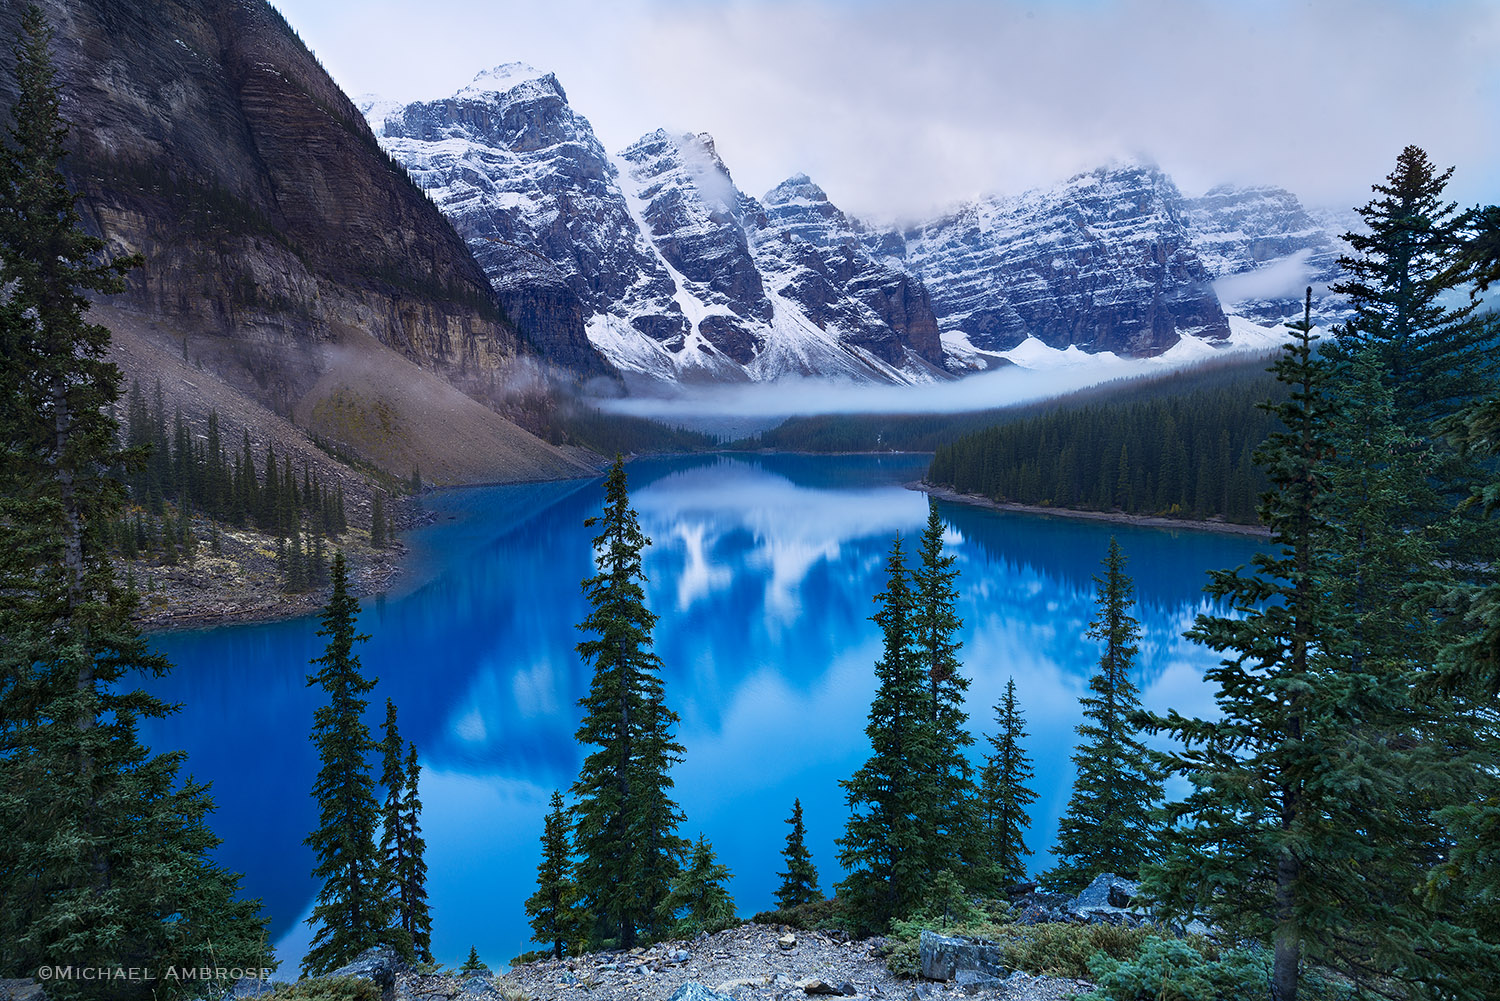 Moraine lake, a beautiful glacier-fed blue lake, is in Banff National Park in Alberta Canada.